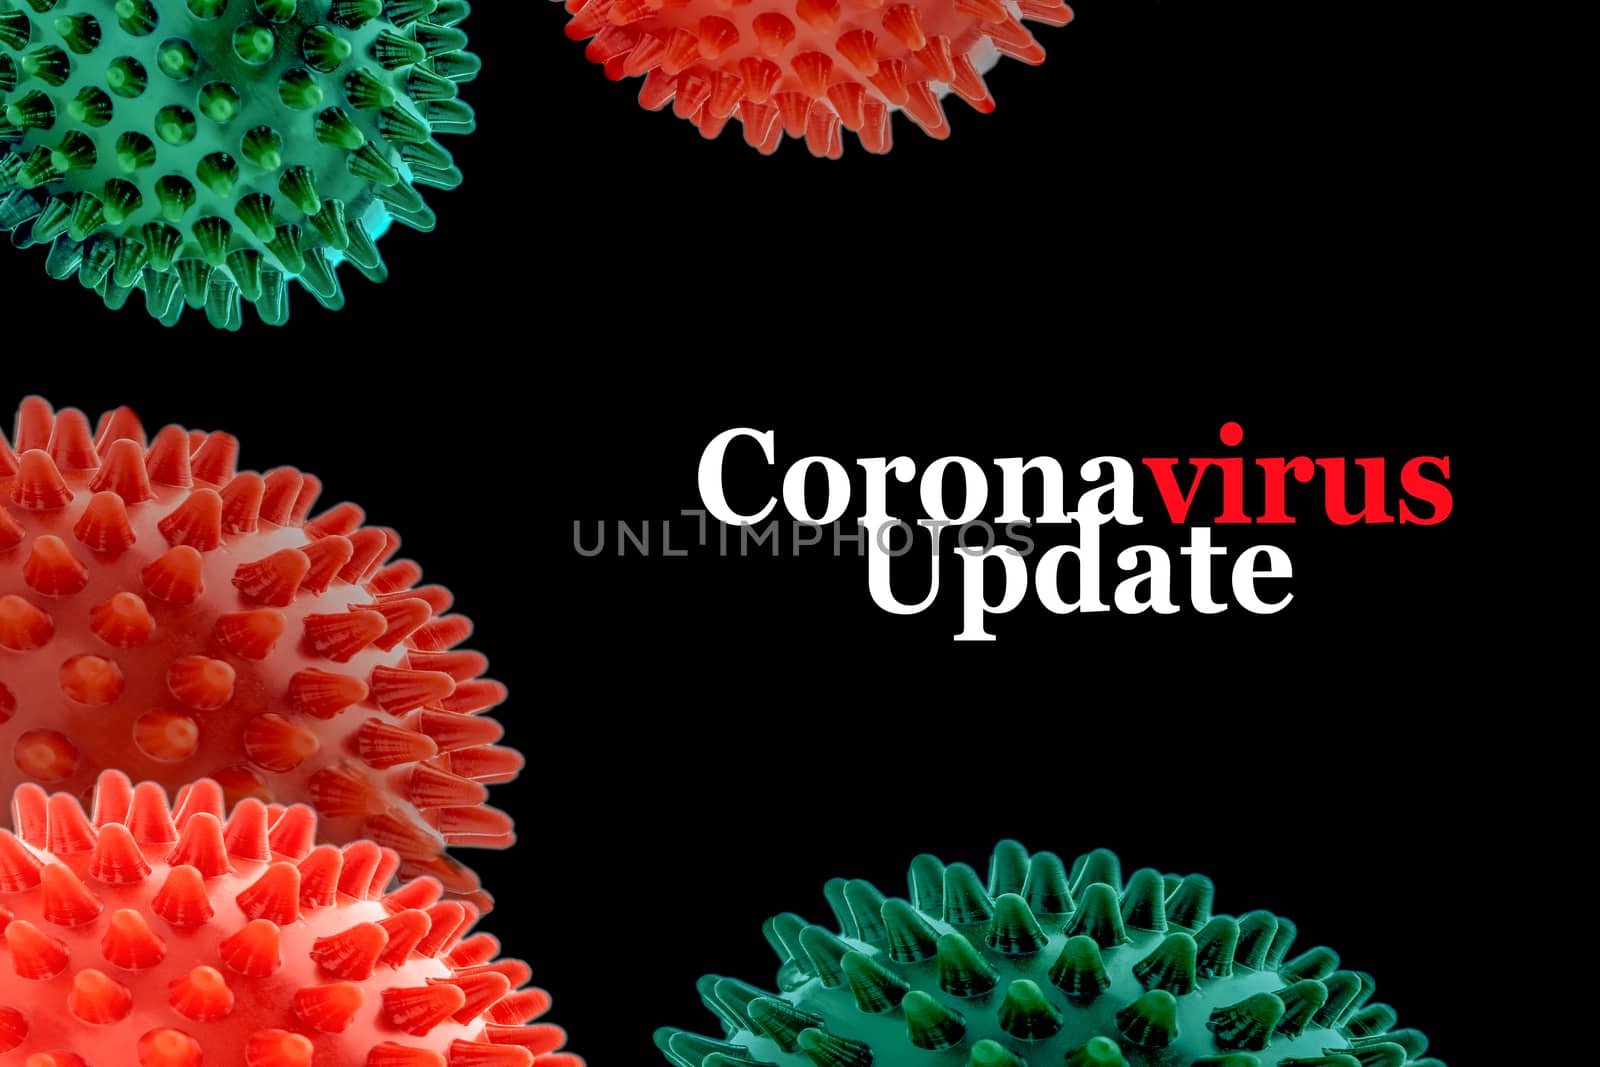 CORONAVIRUS UPDATE text on black background. Covid-19 or Coronavirus concept